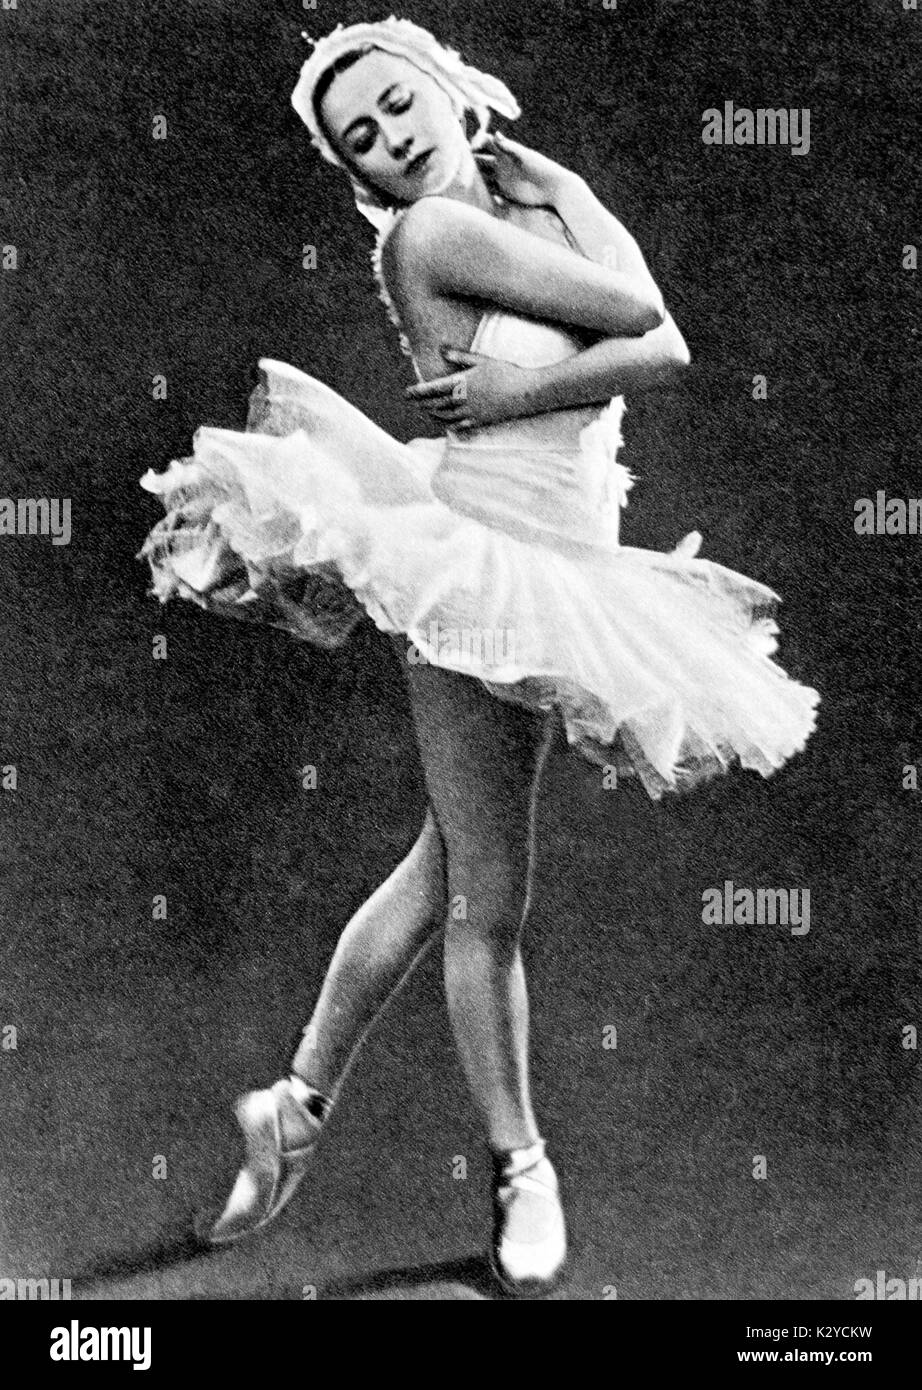 Galina Sergeyevna Ulanova as Odette in Piotr Tchaikovsky 's ballet Swan Lake. Soviet ballerina, 8 January 1910 - 21 March 1998. Tchaikovsky: Russian composer, 7 May 1840 - 6 November 1893. Stock Photo